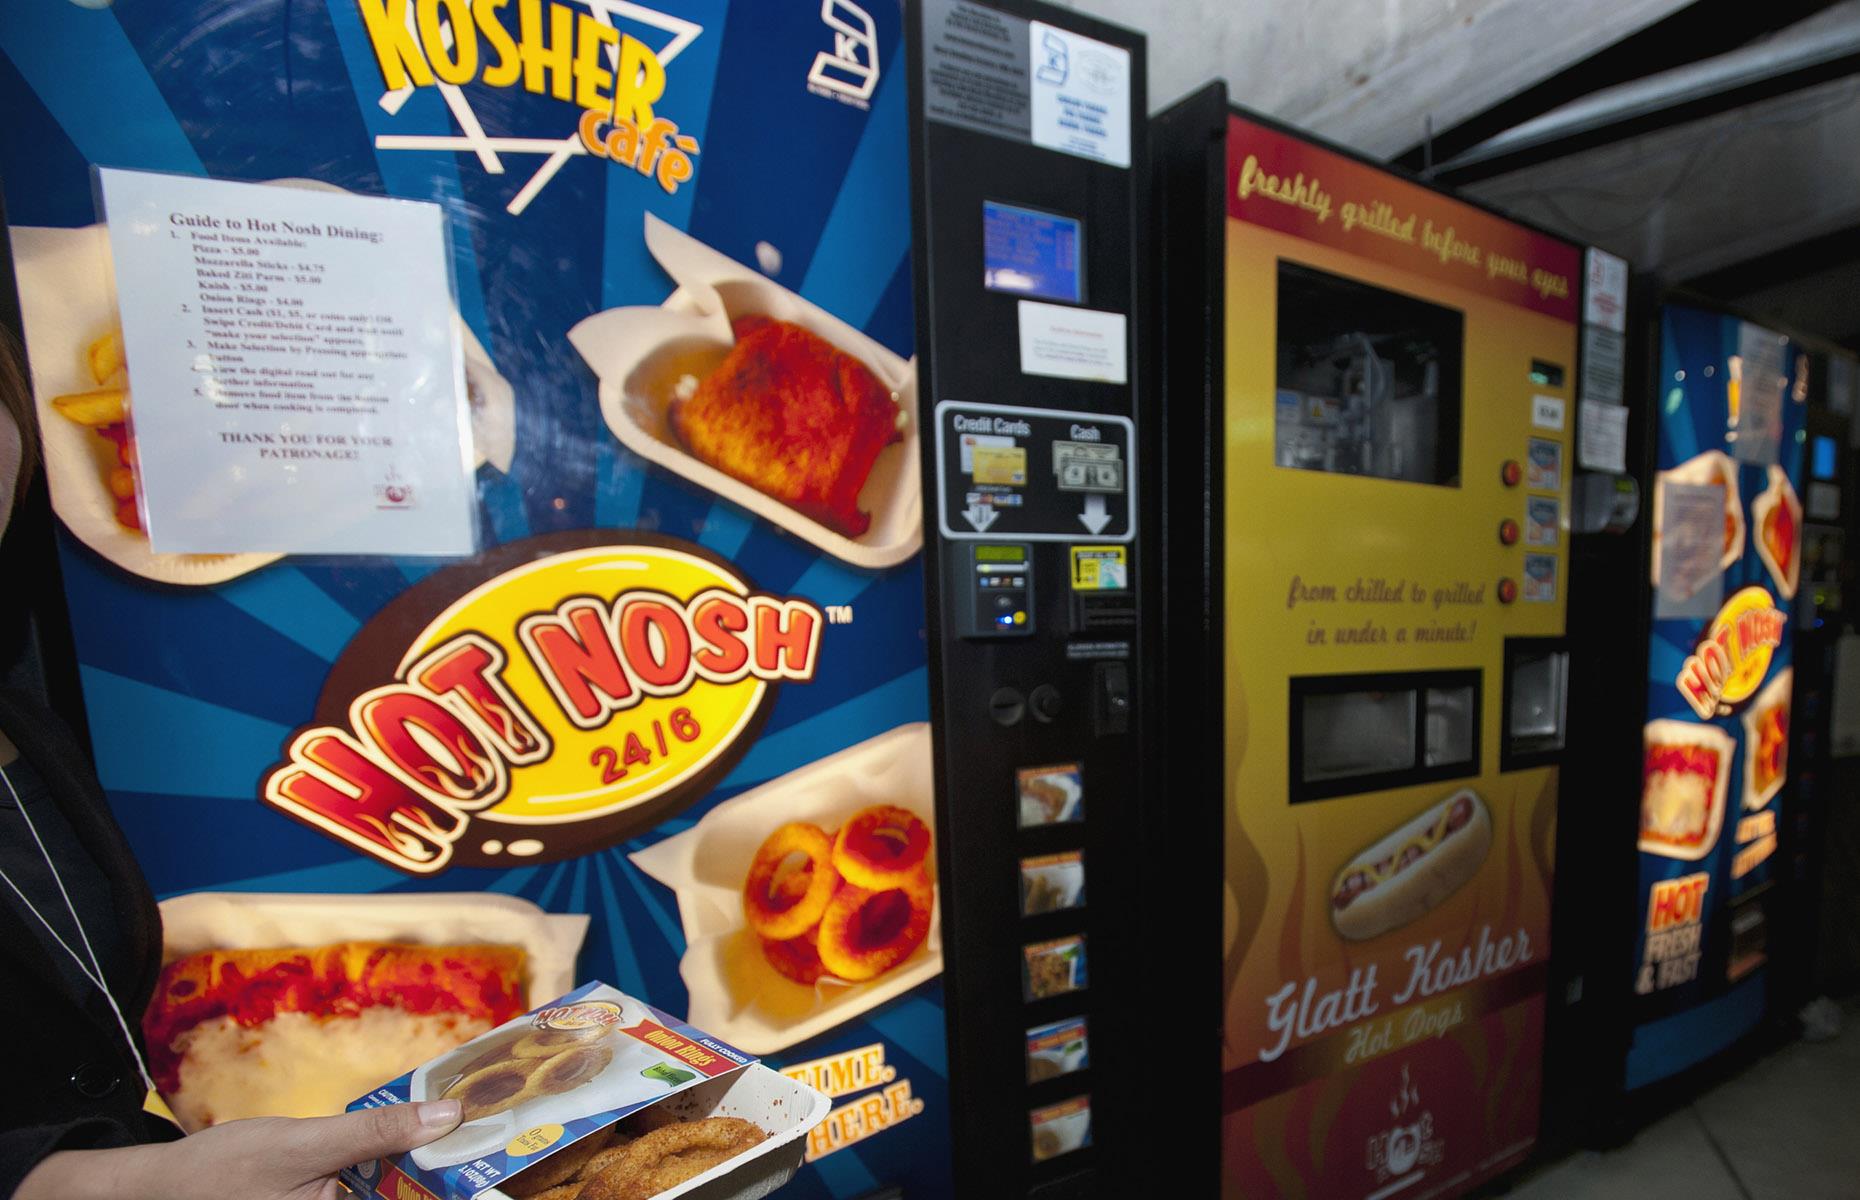 Hotdog Vending Machine in Japan! 